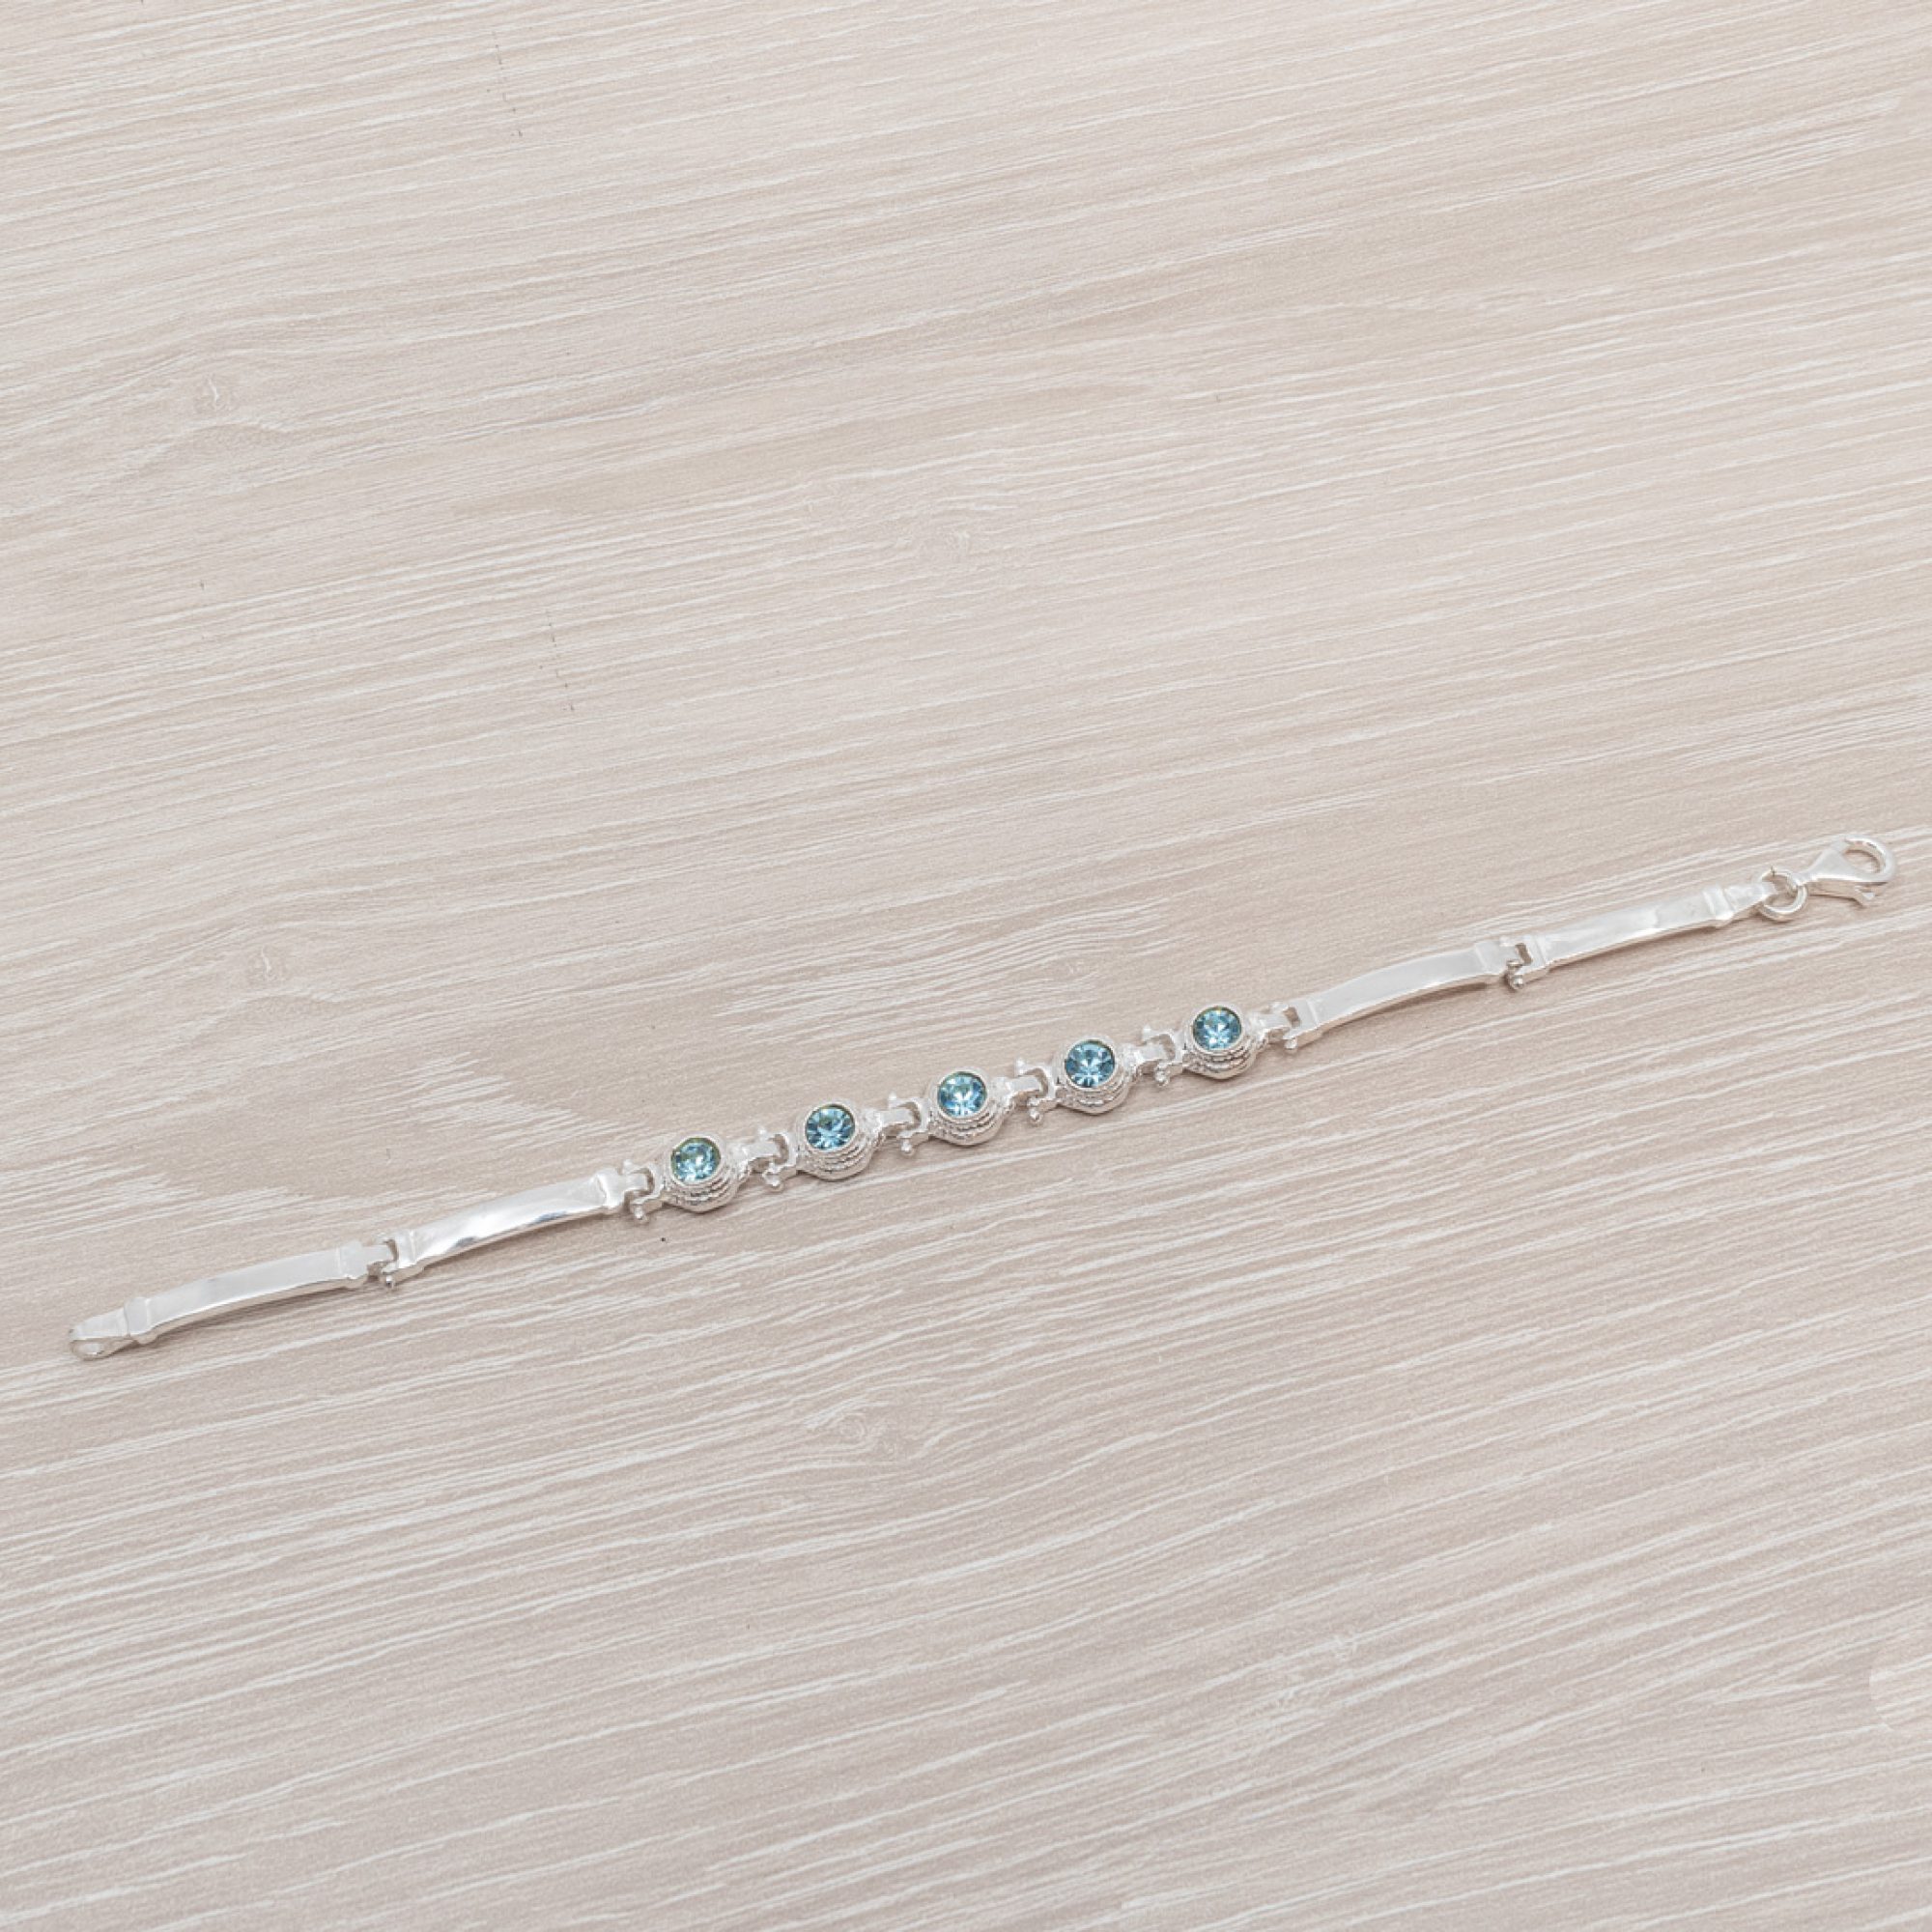 Bracelet with aquamarine stones